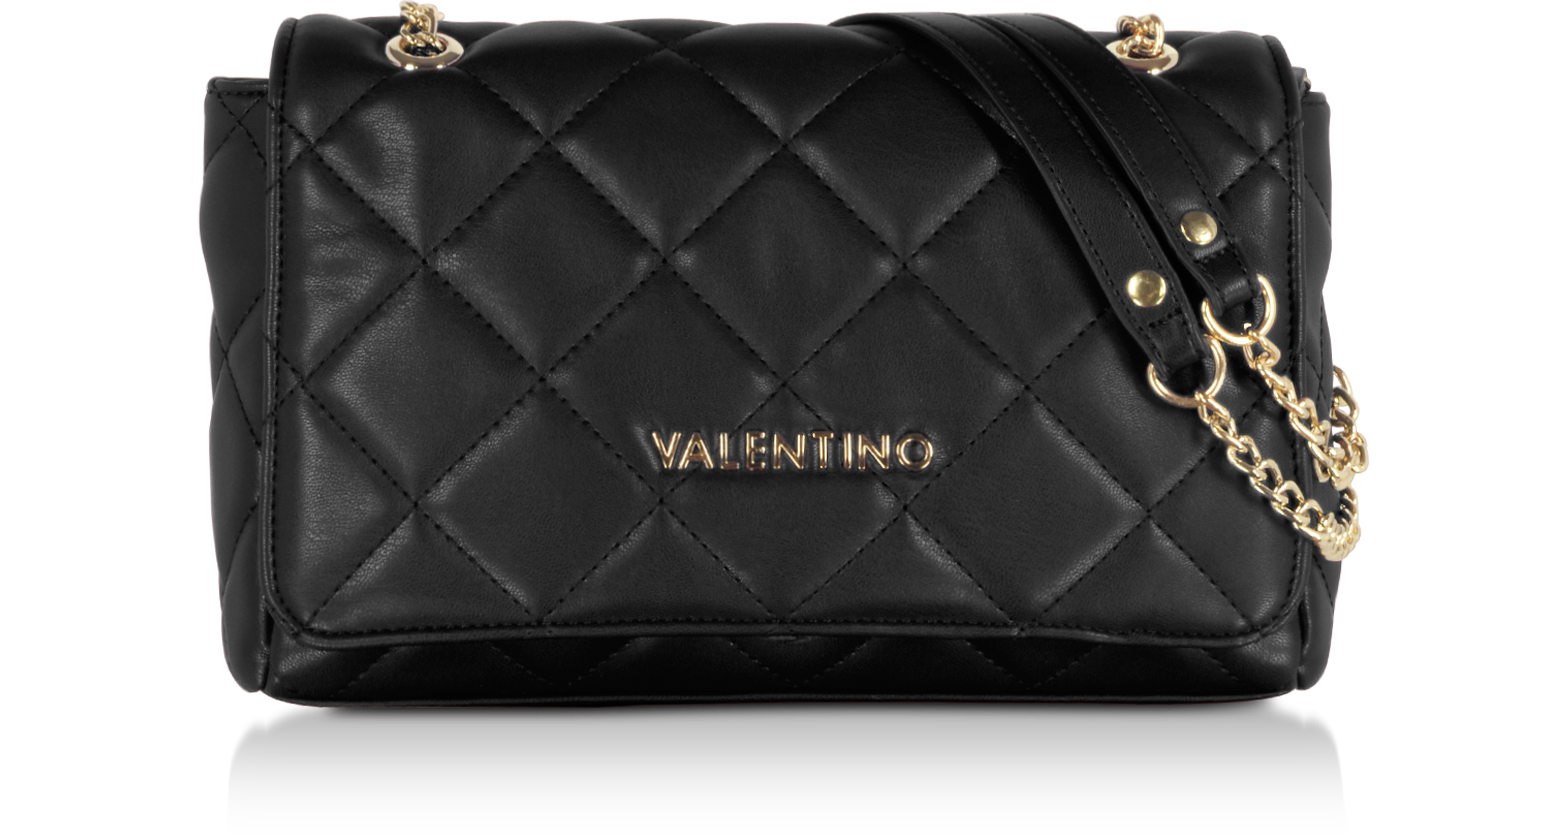 Valentino by Mario Valentino Handbags - Up to 77% OFF